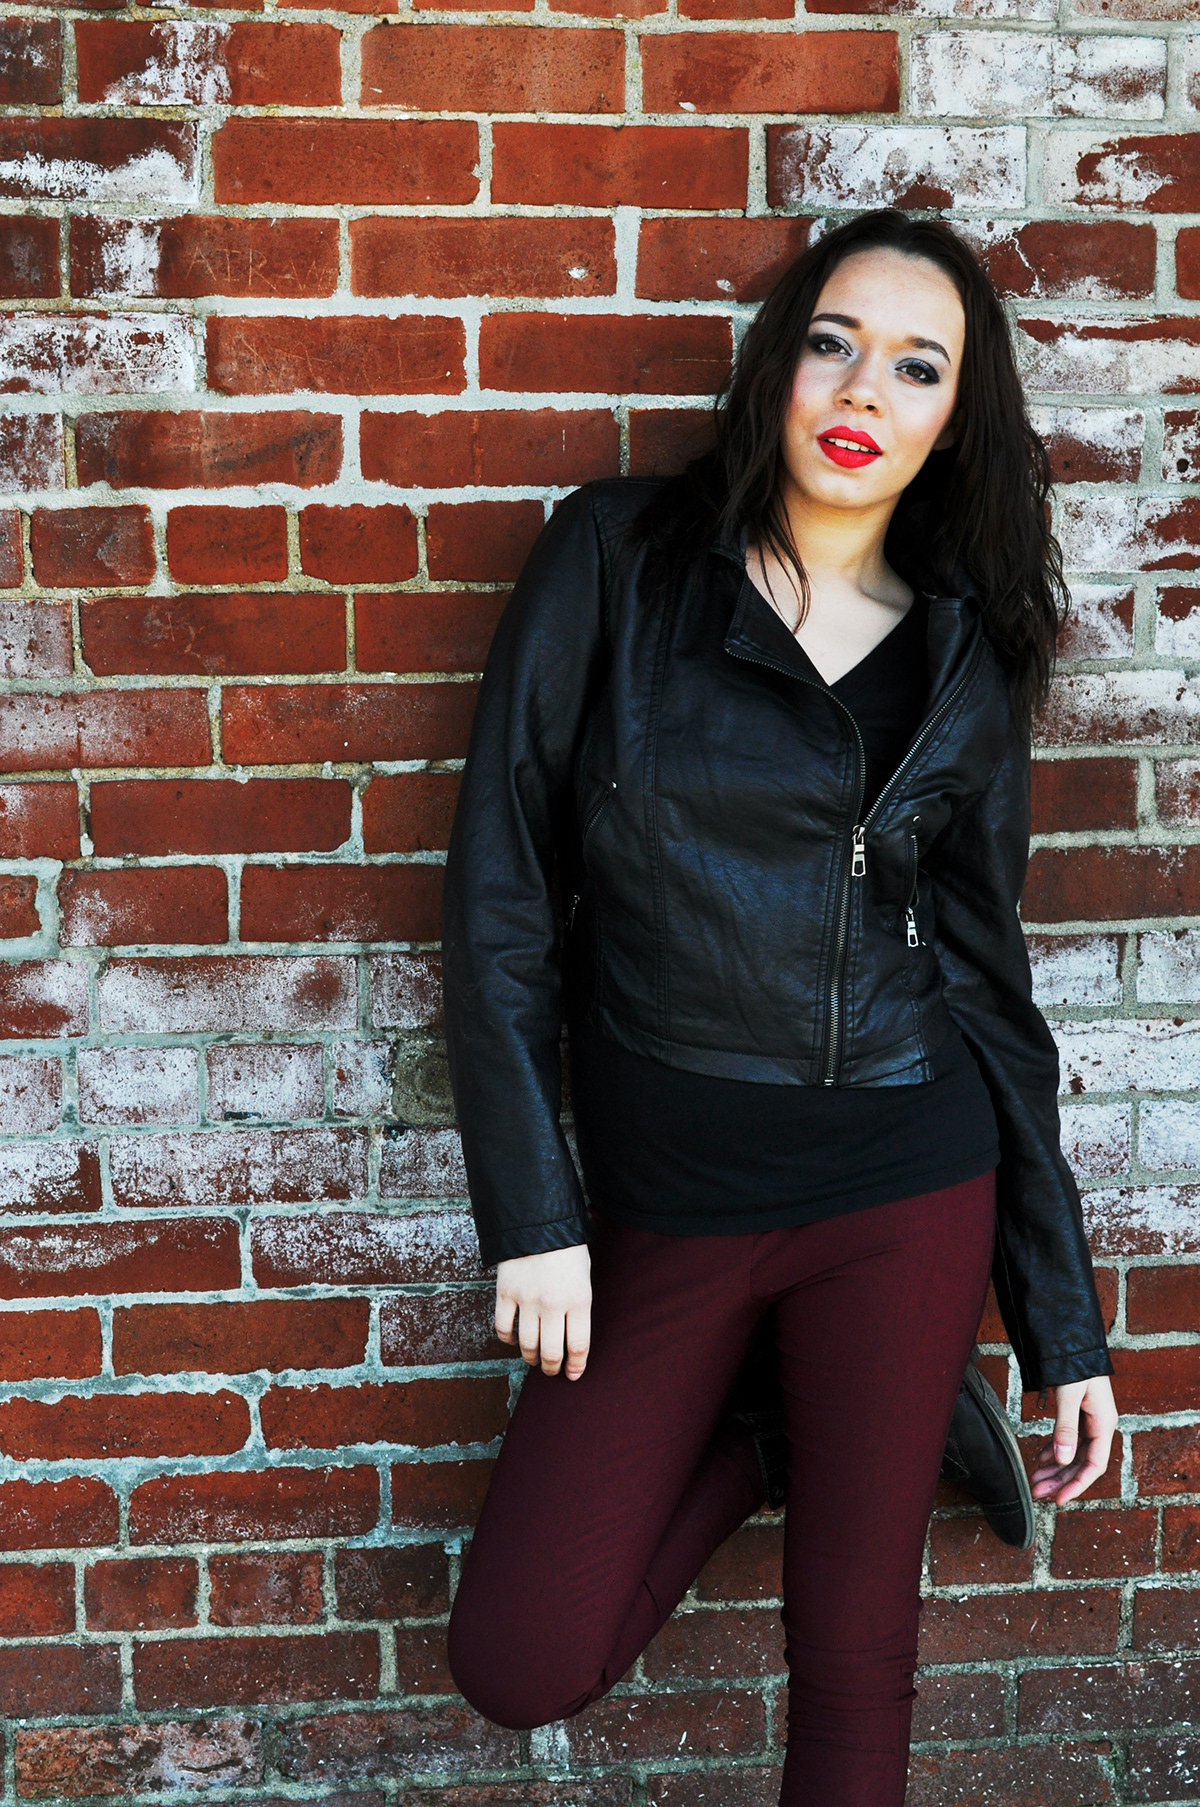 portrait girl red black downtown shoot teen teenager people